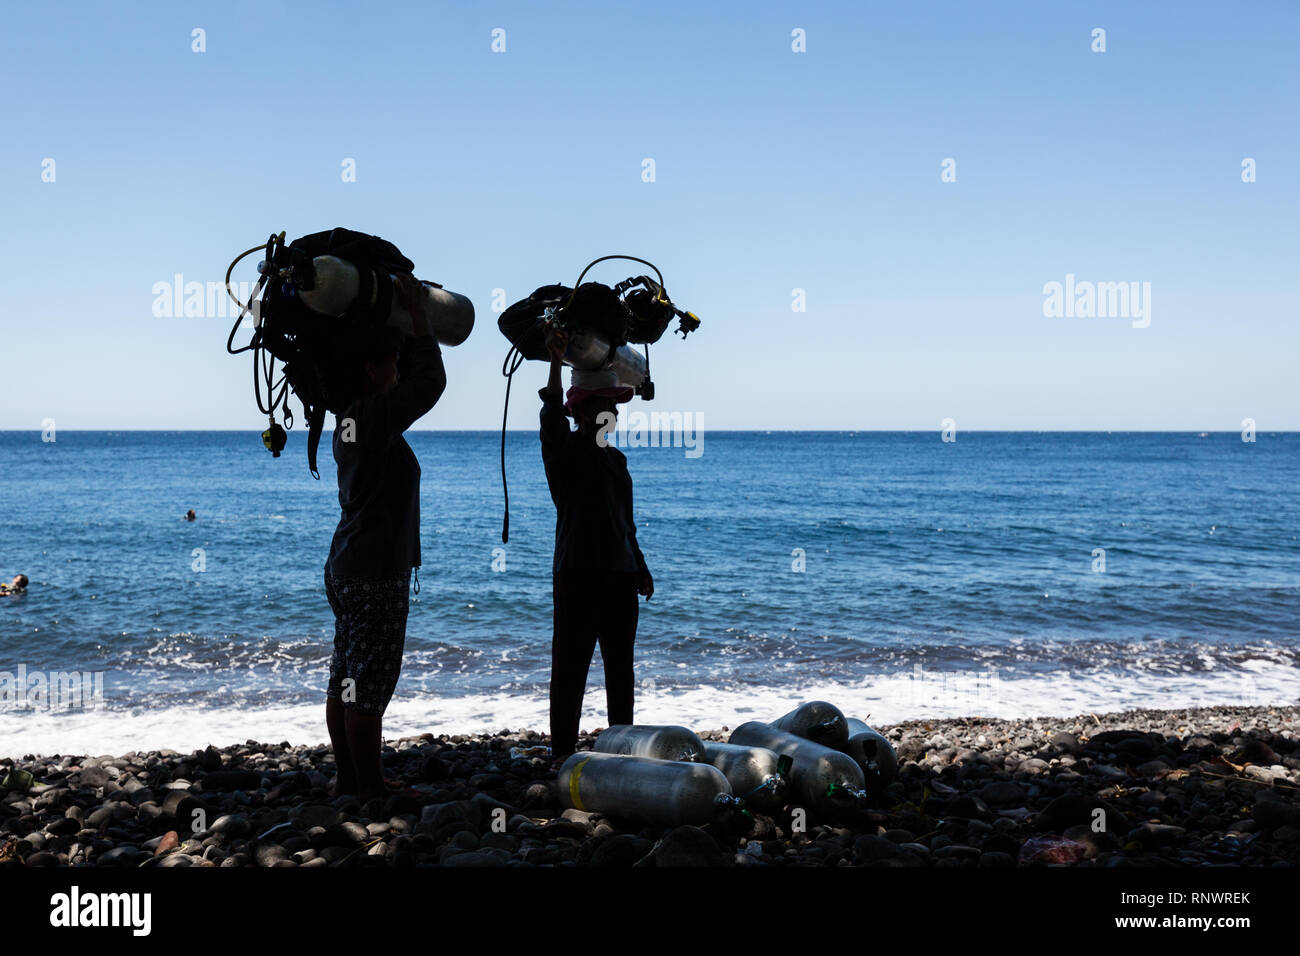 Dos mujeres portan pesadas scuba diving gear sobre sus cabezas, un sitio común en Tulemban, Bali, Indonesia. Foto de stock